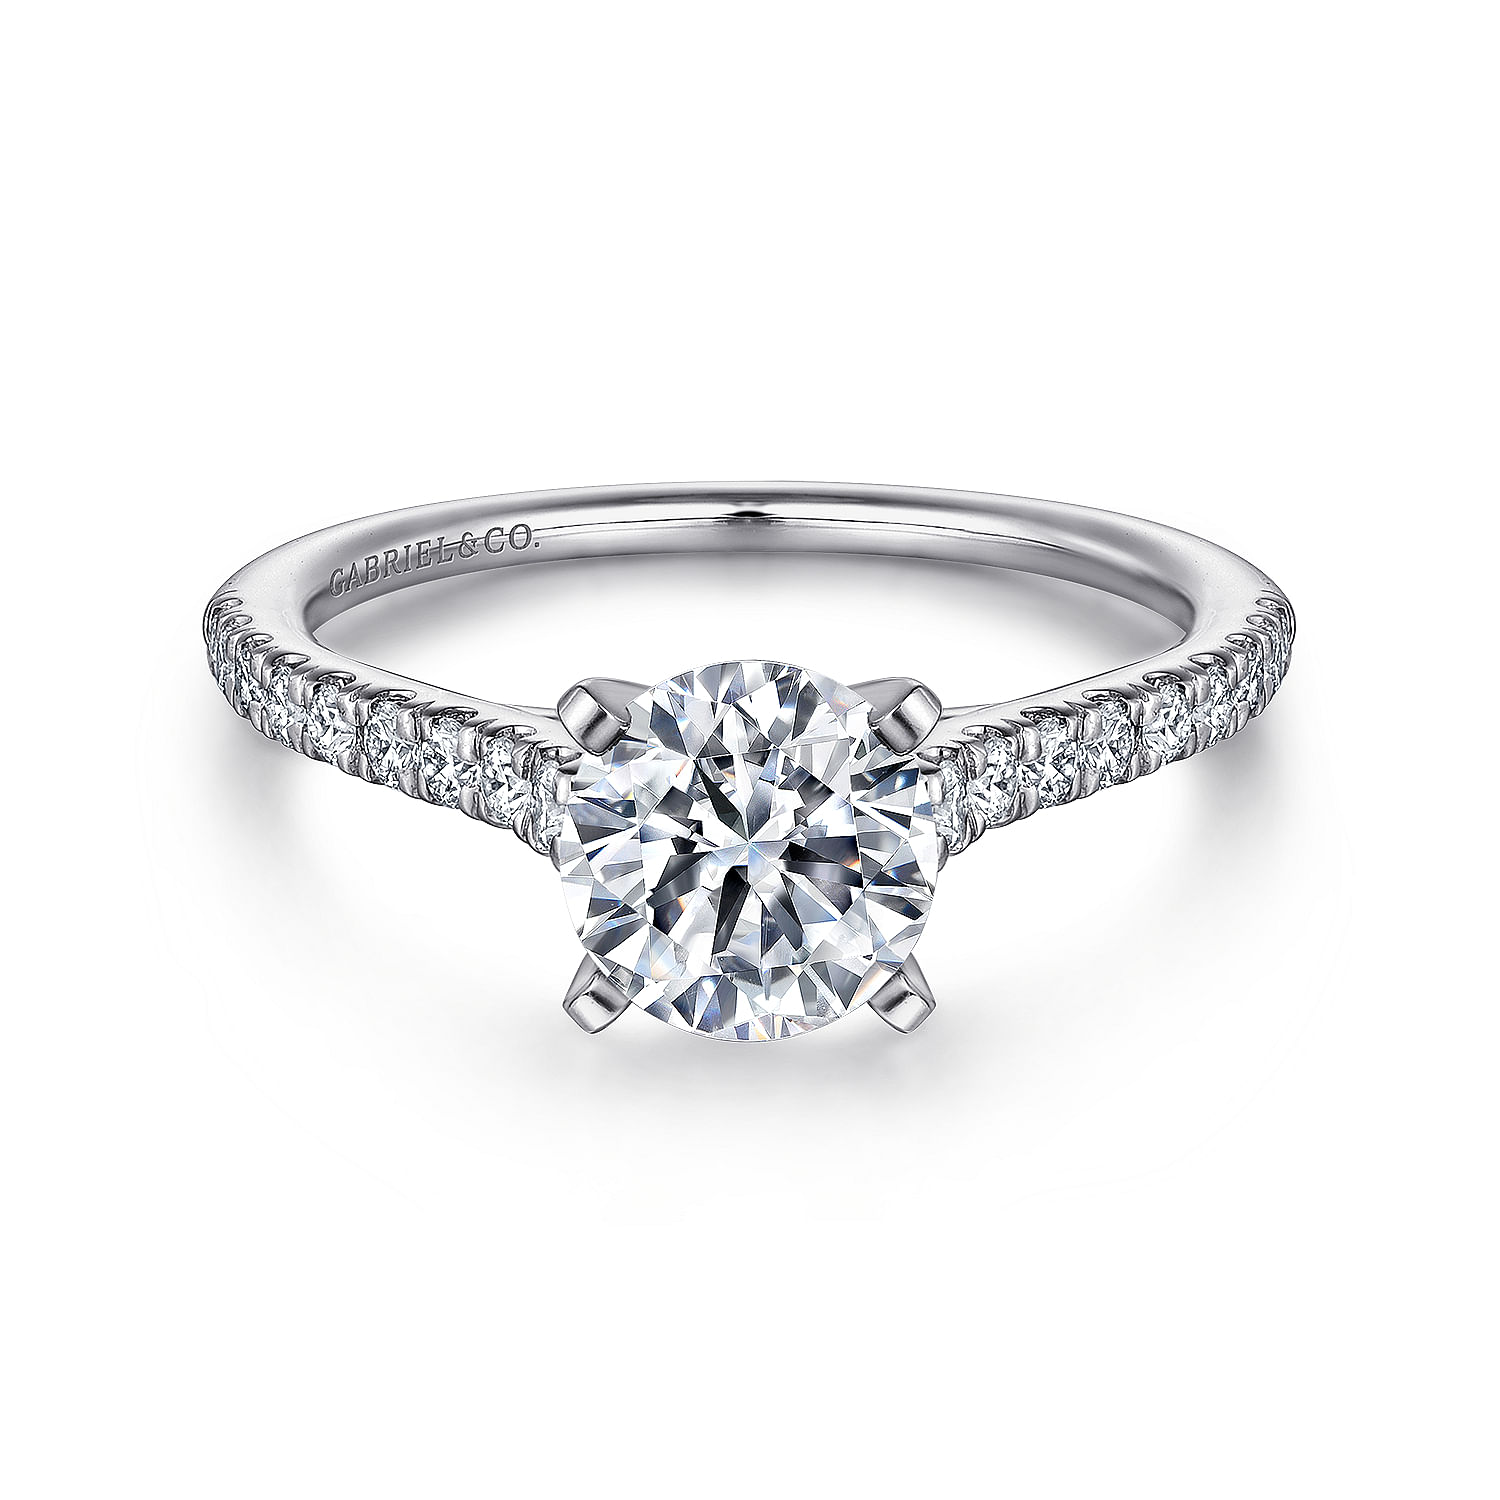 Jennie---14K-White-Gold-Round-Diamond-Engagement-Ring1